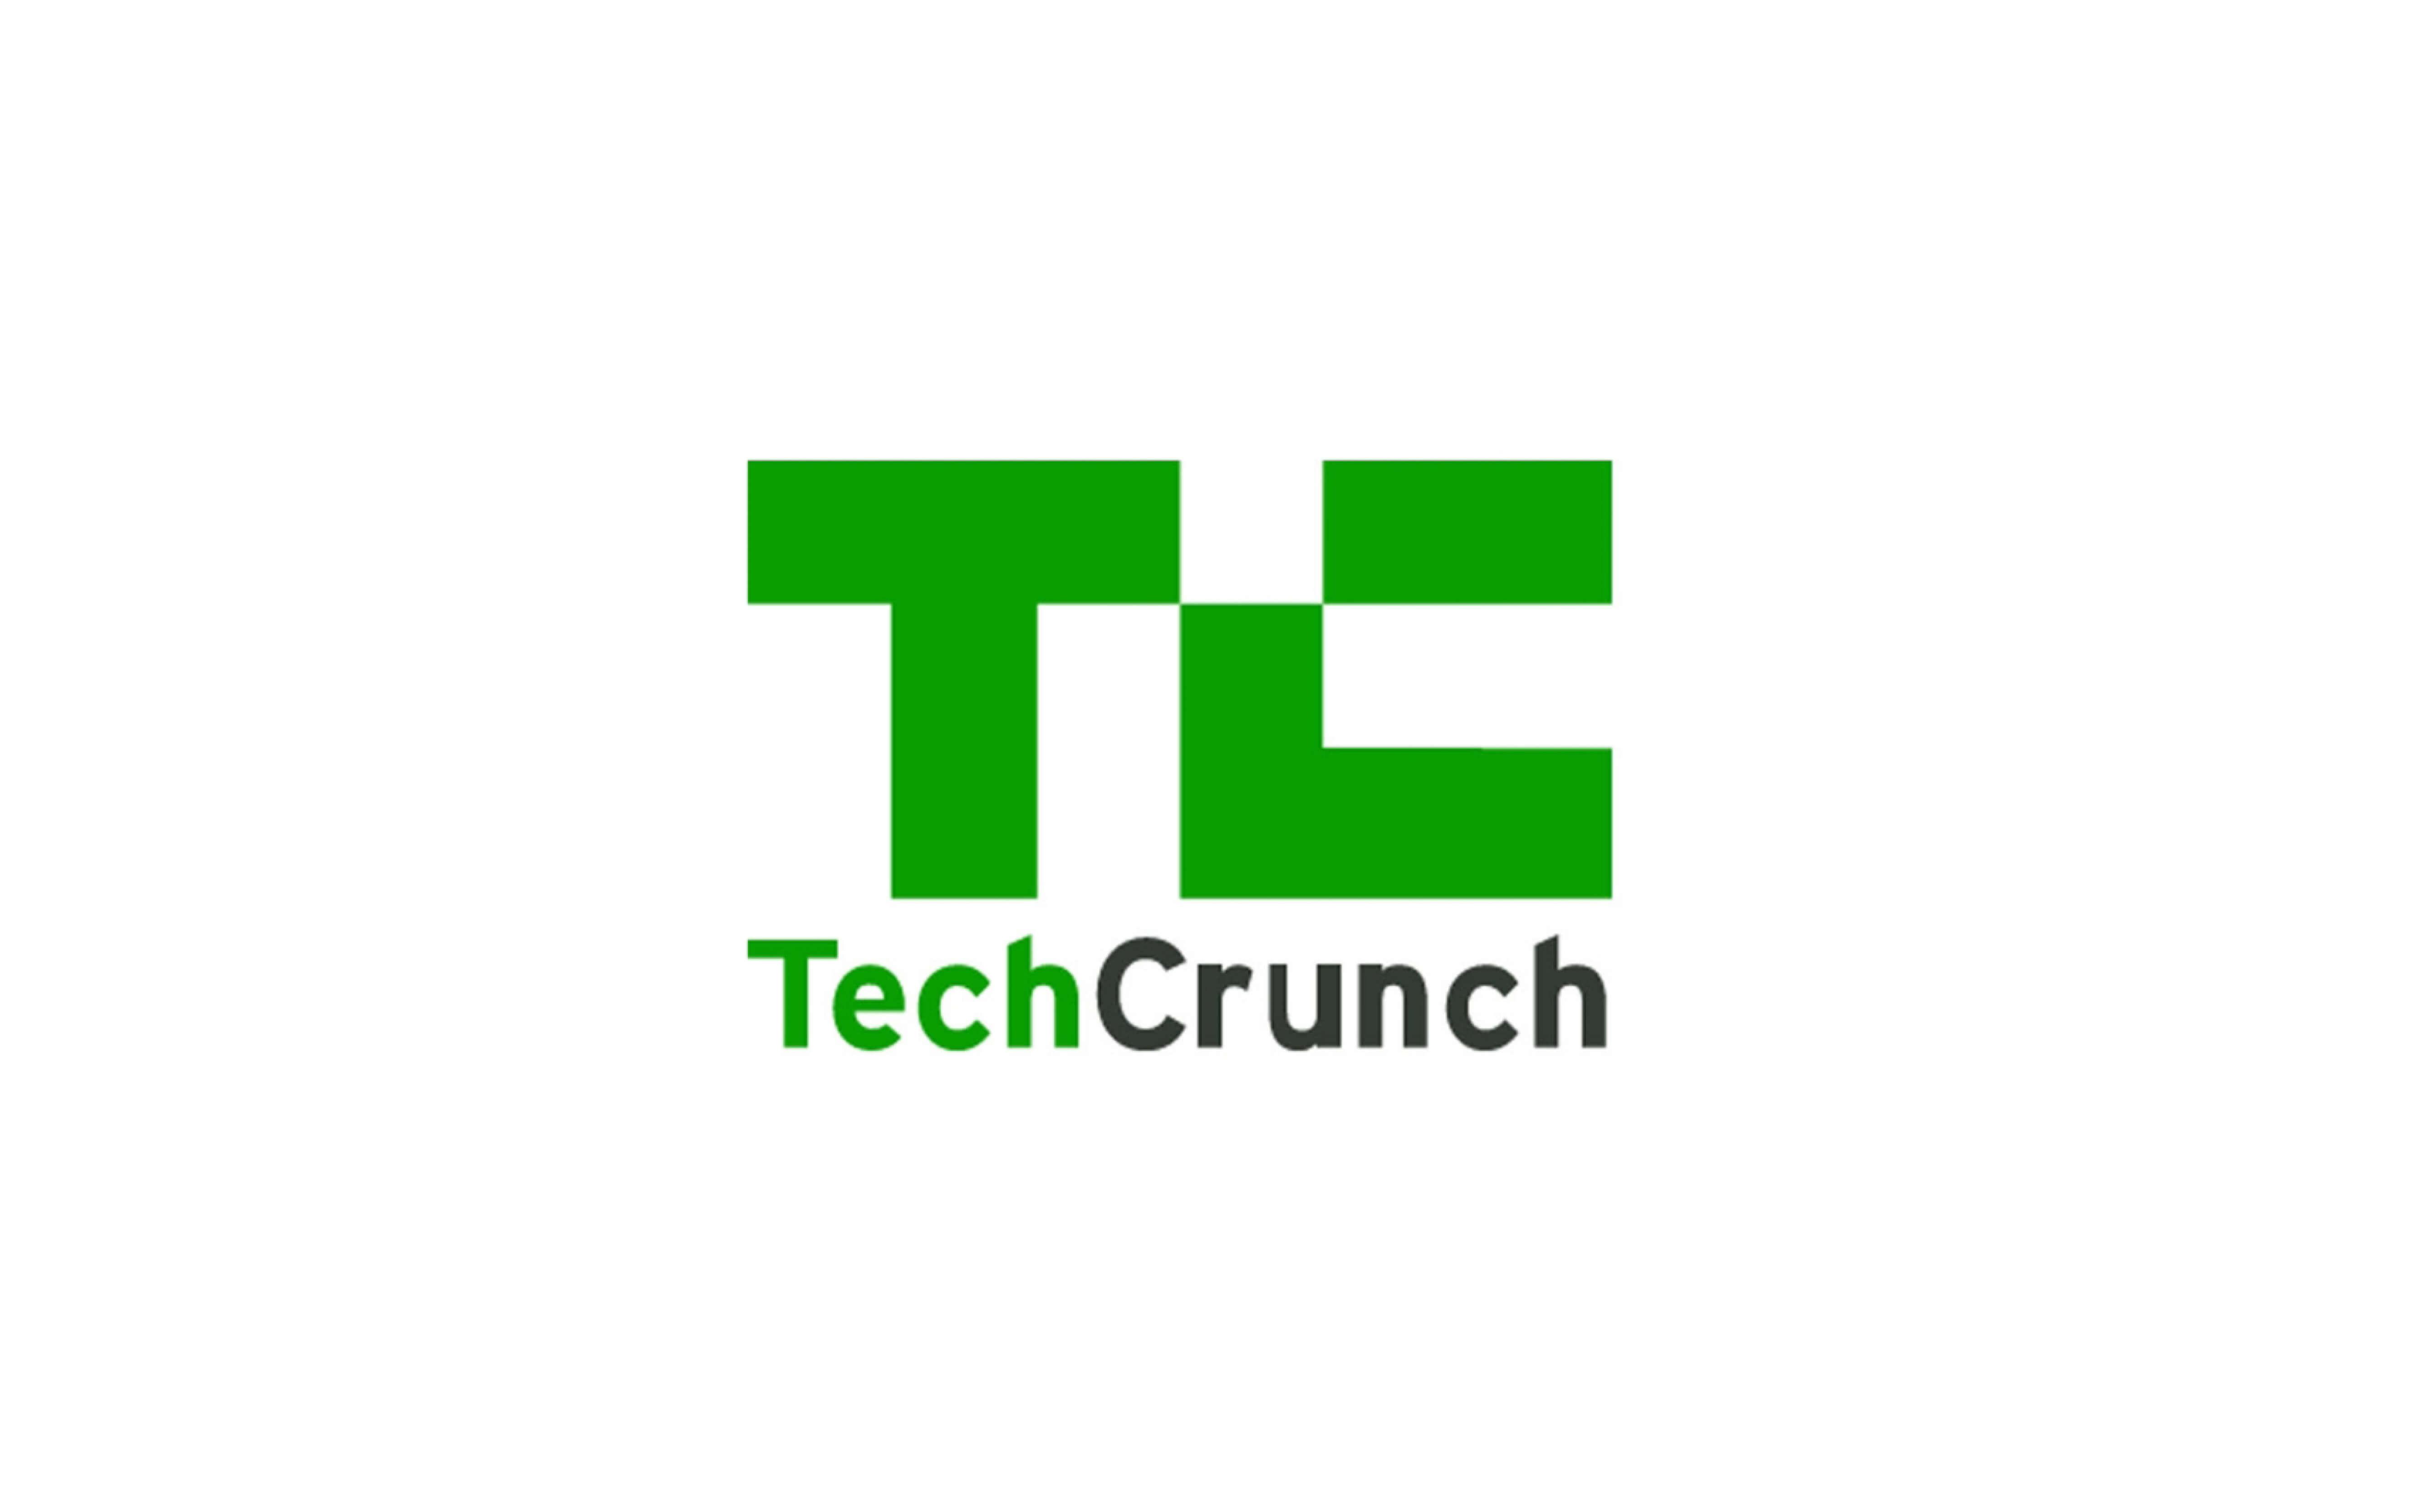 TechCrunch Logo - tech crunch logo green